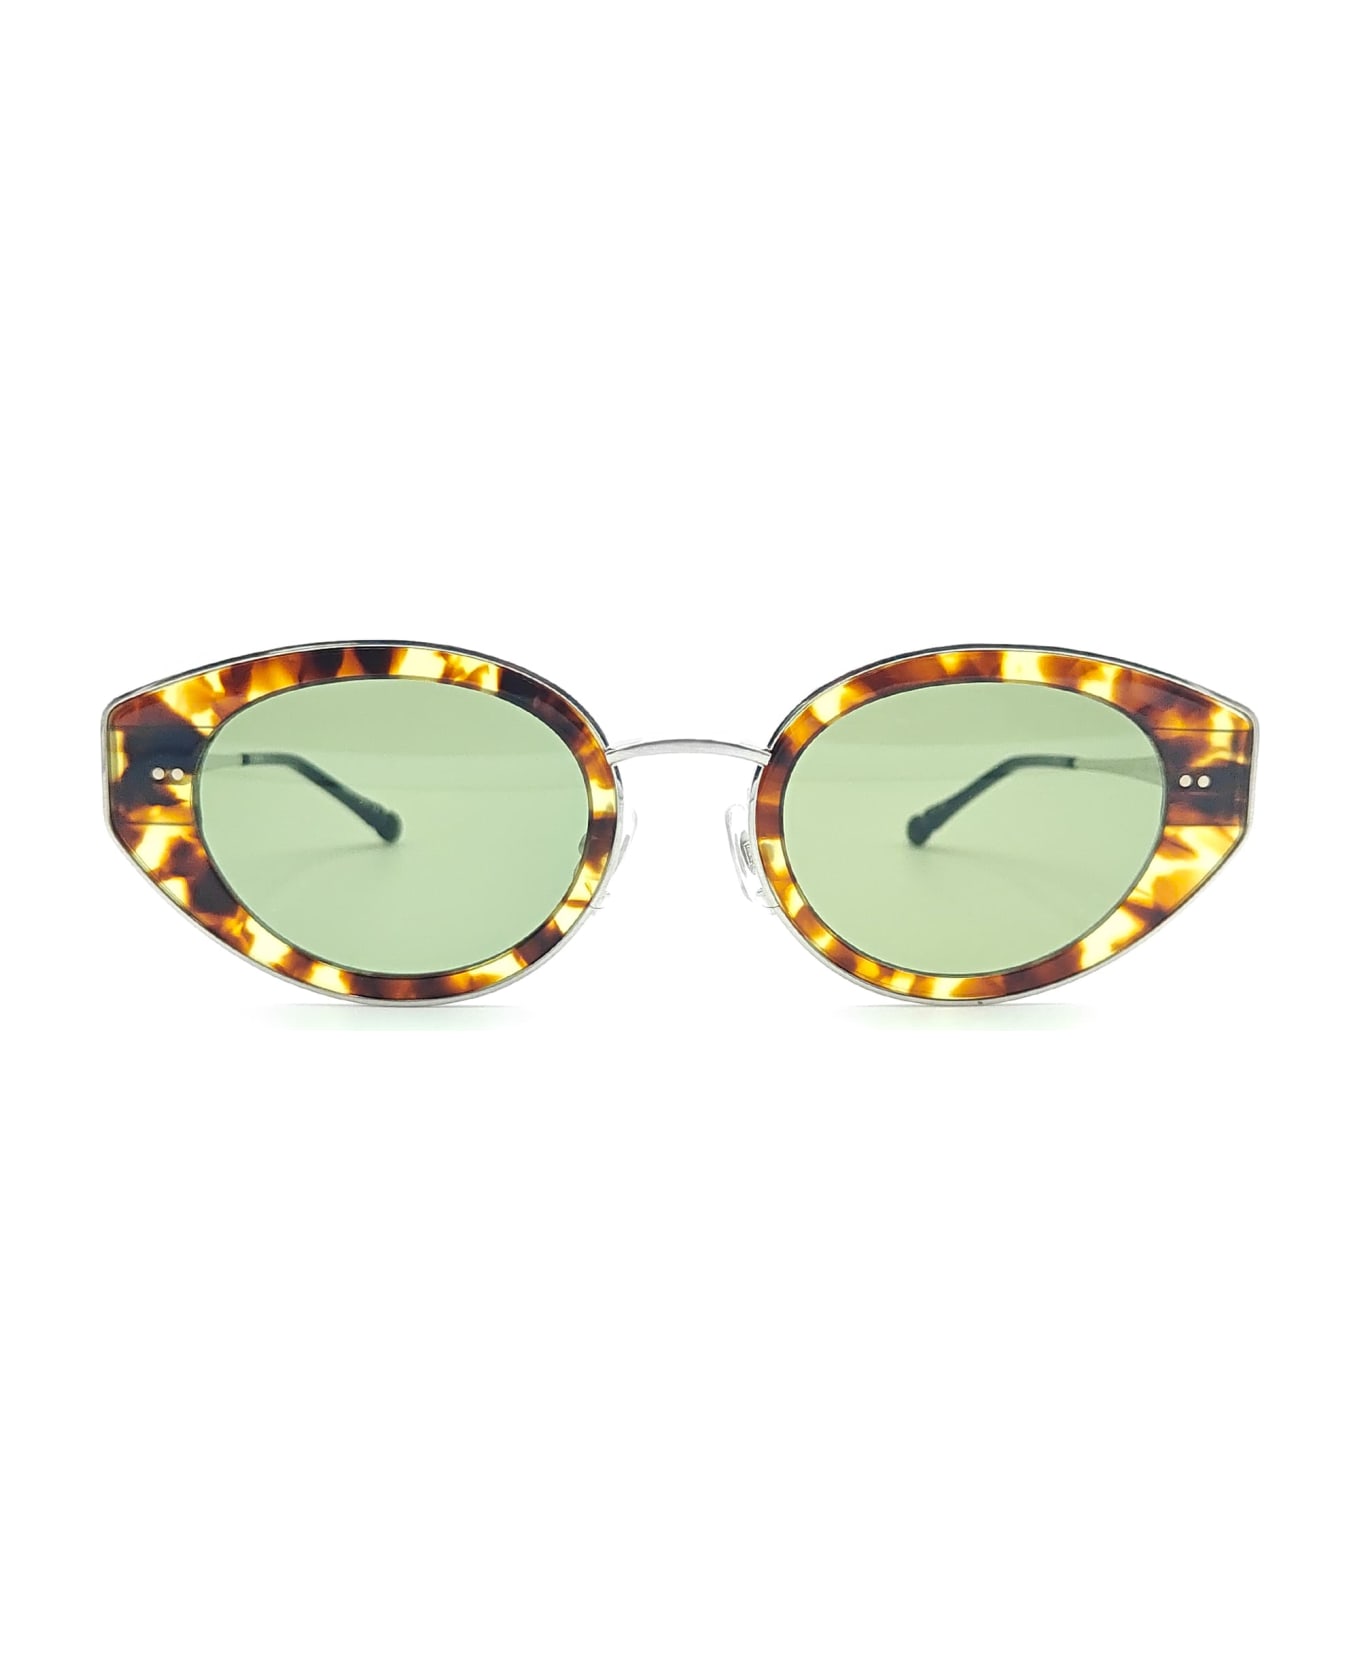 Matsuda M3120 - Tortoise / Brushed Silver Sunglasses - Tortoise/silver サングラス